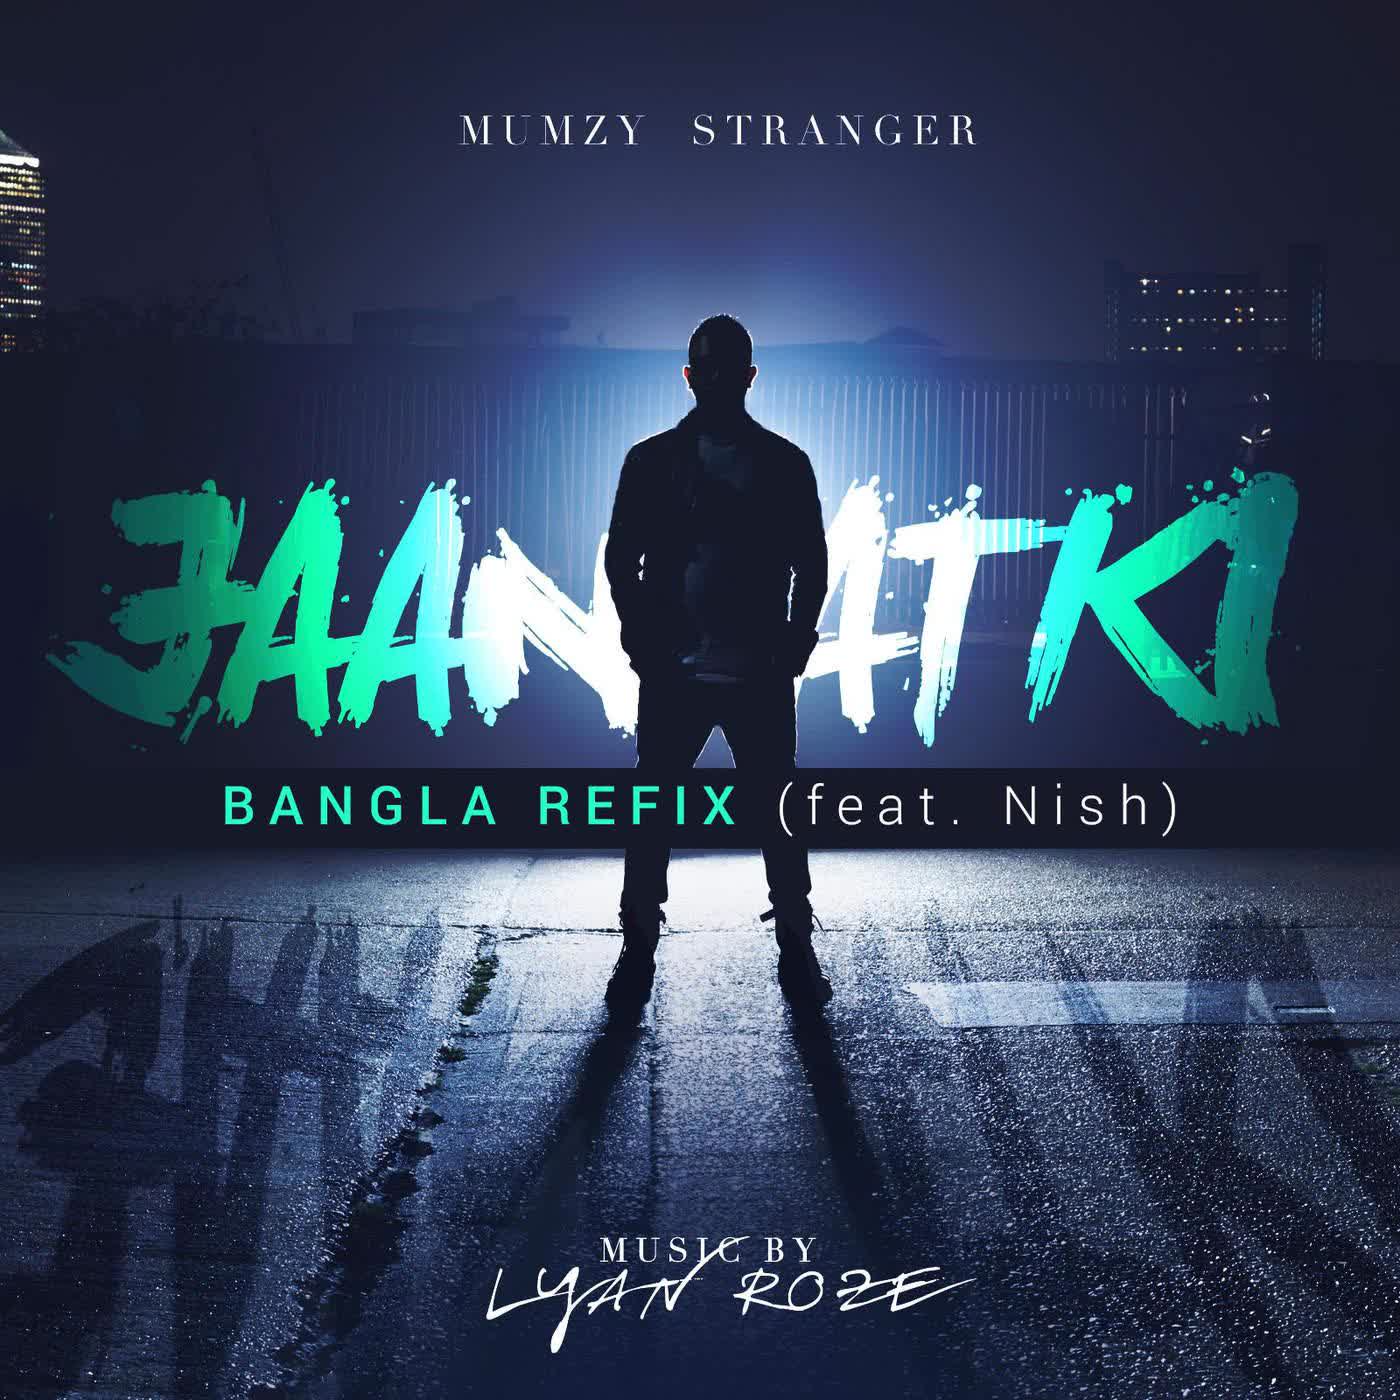 Jaan Atki (Bangla Refix) Mumzy Stranger  Mp3 song download